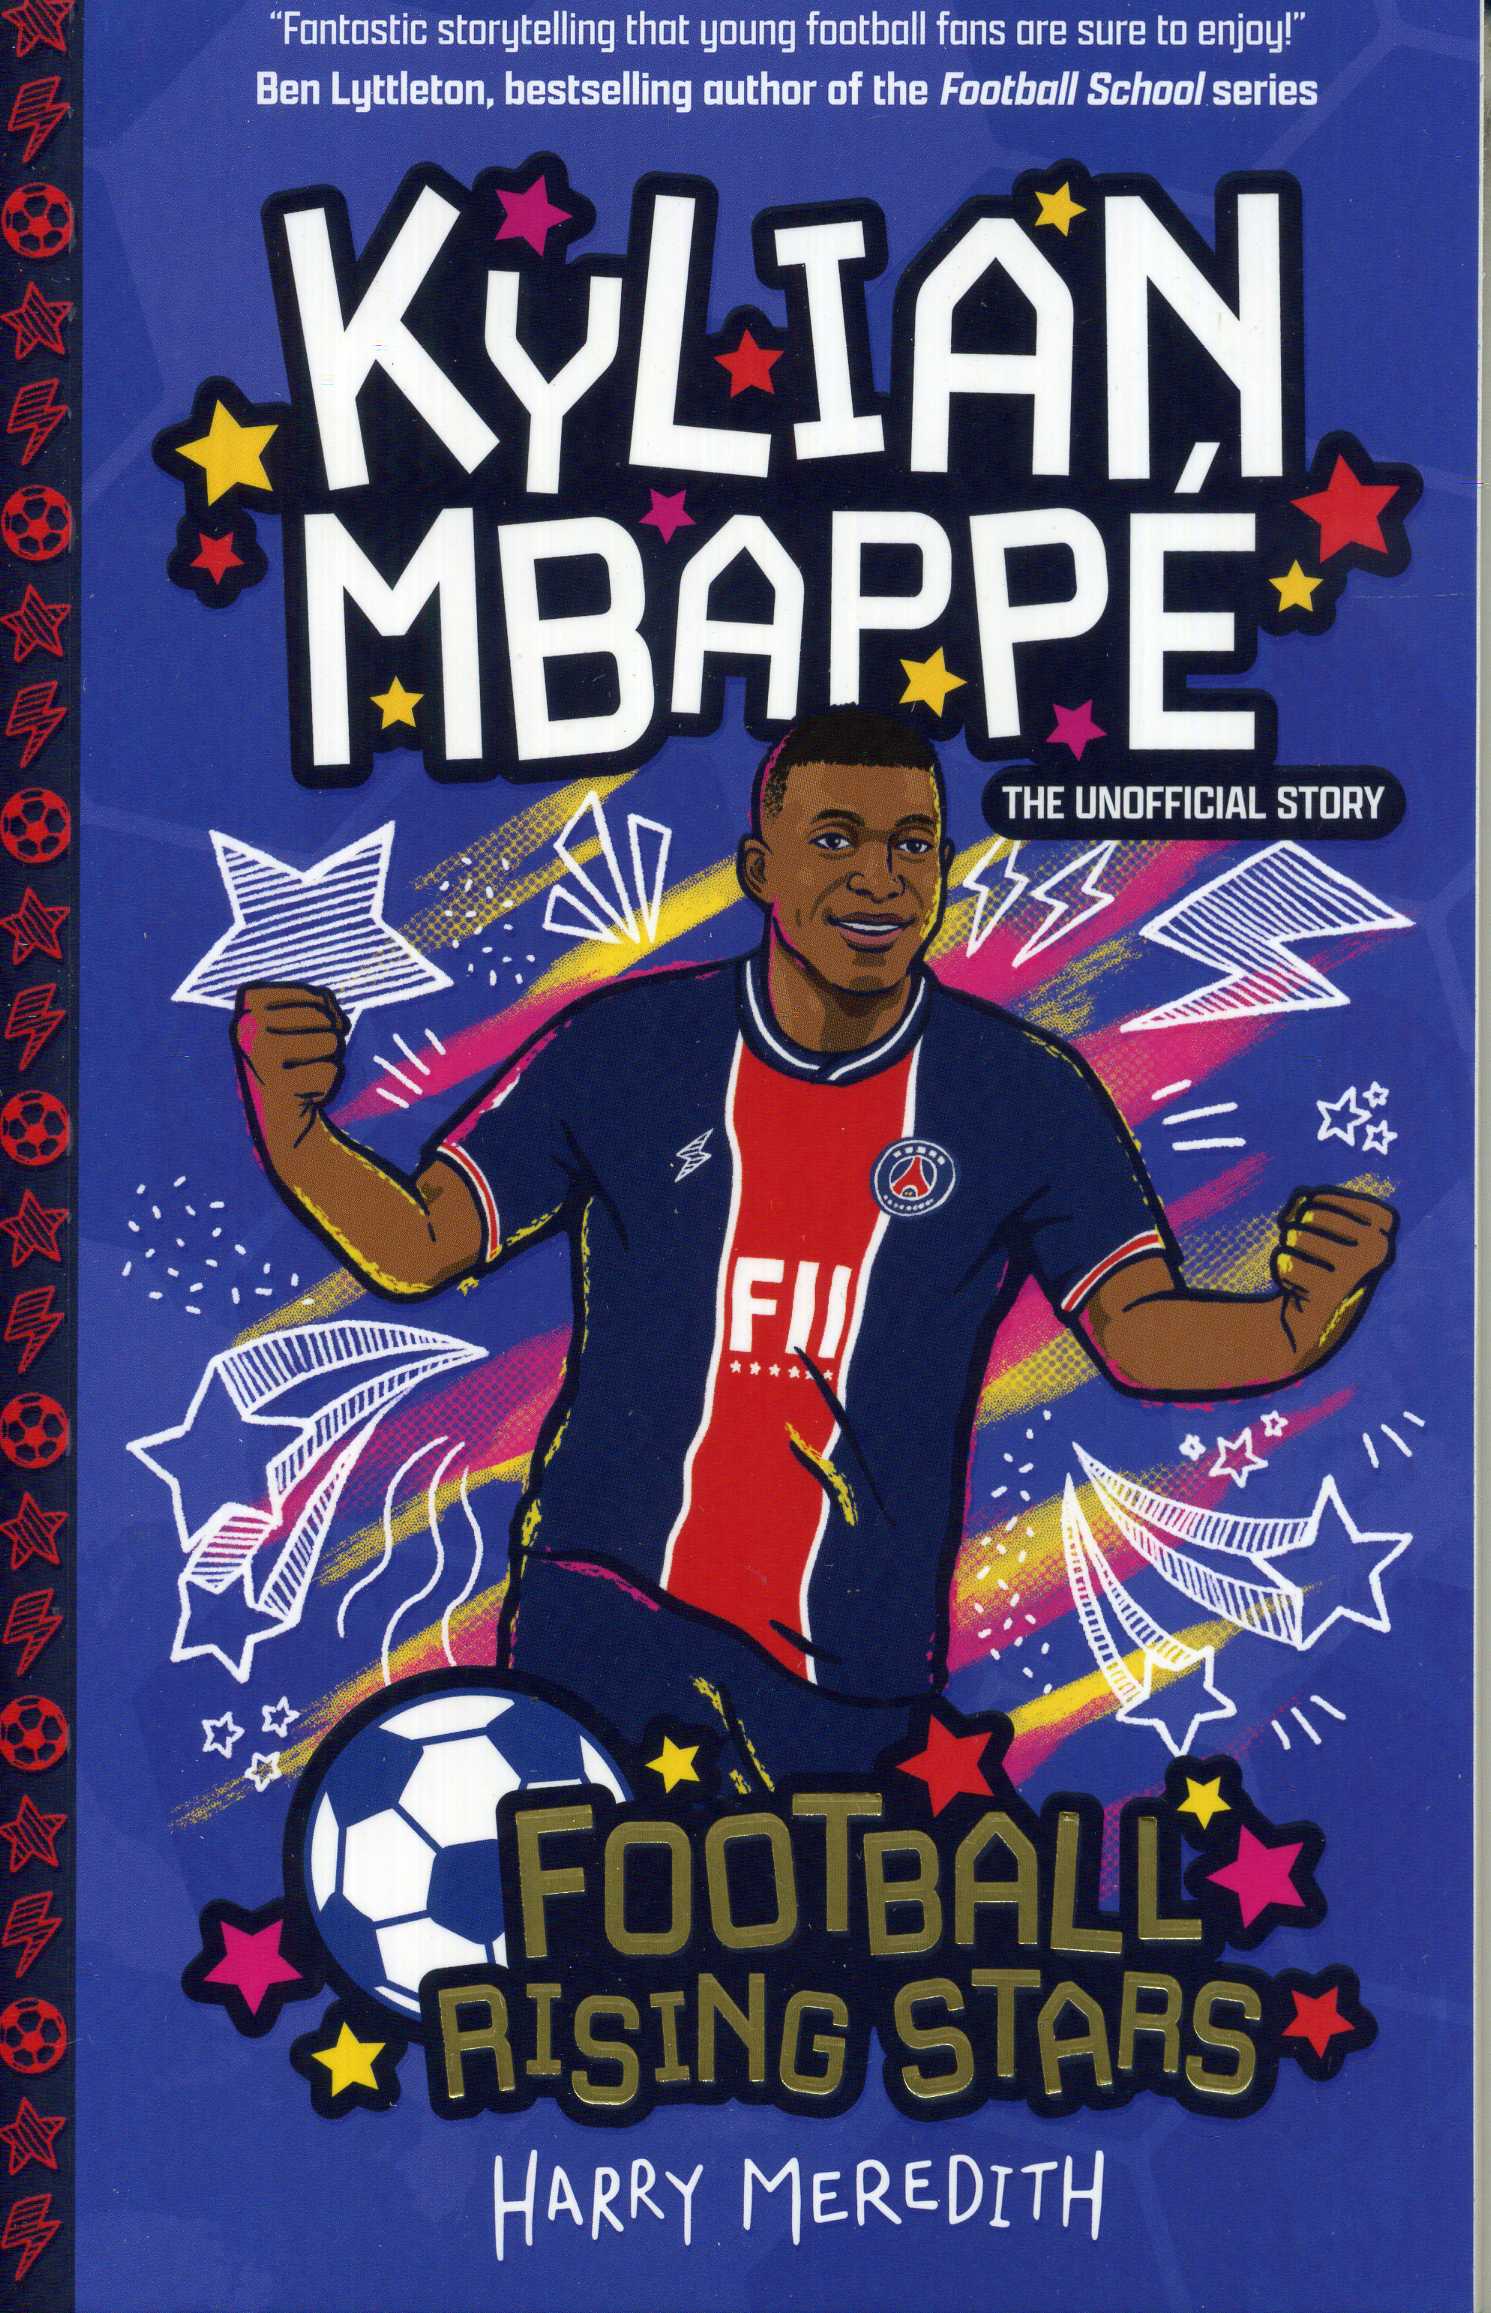 The story of Kylian Mbappé 